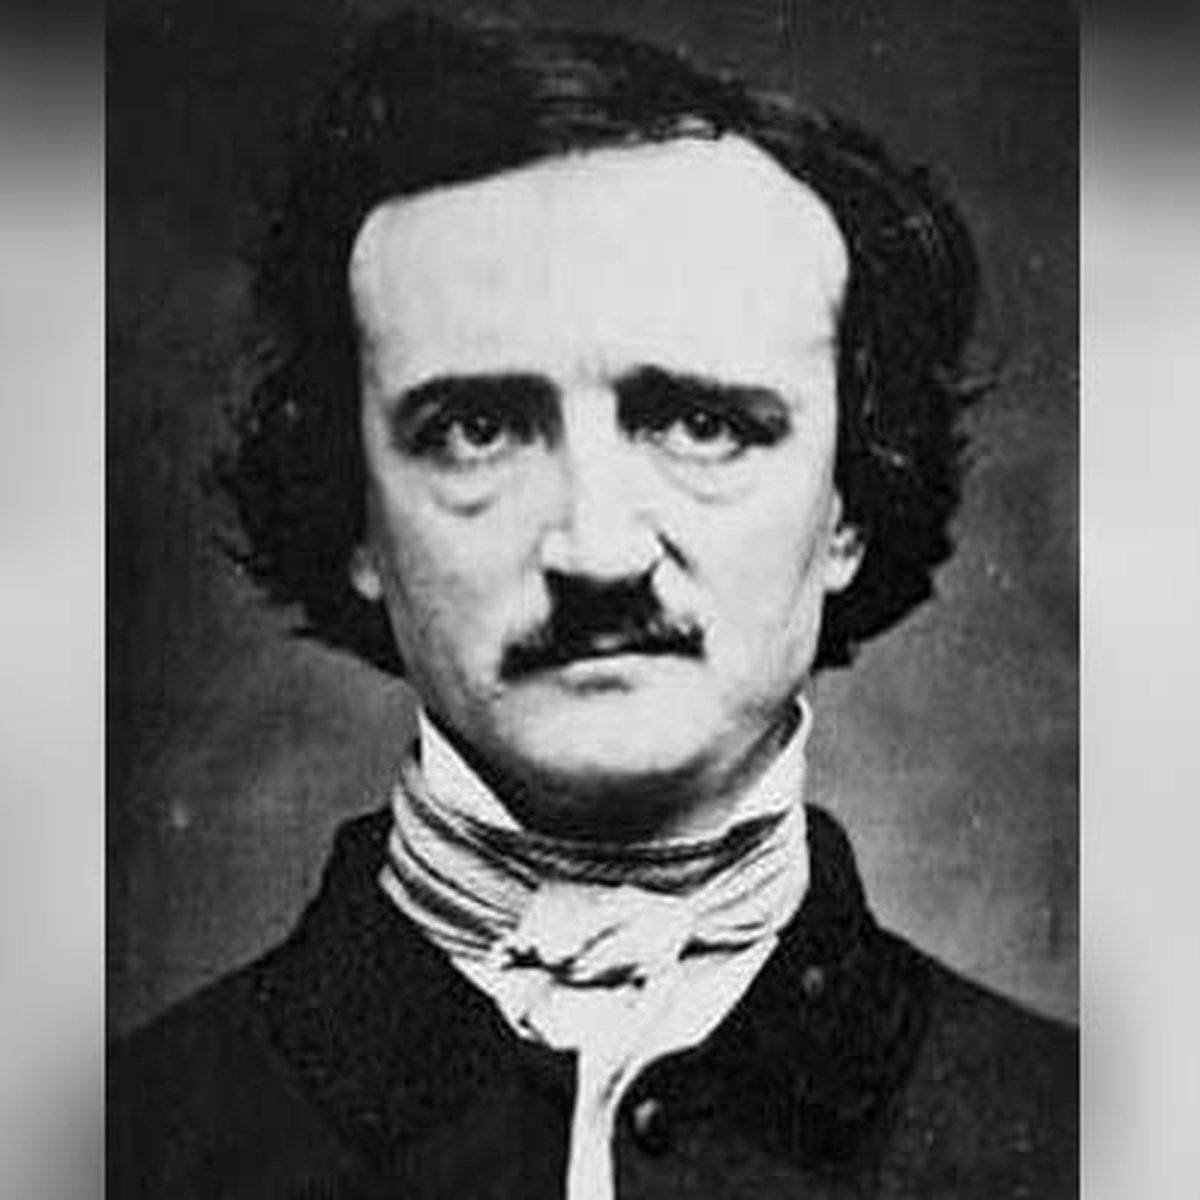 1849 - Edgar Allen Poe seen in public for the last time